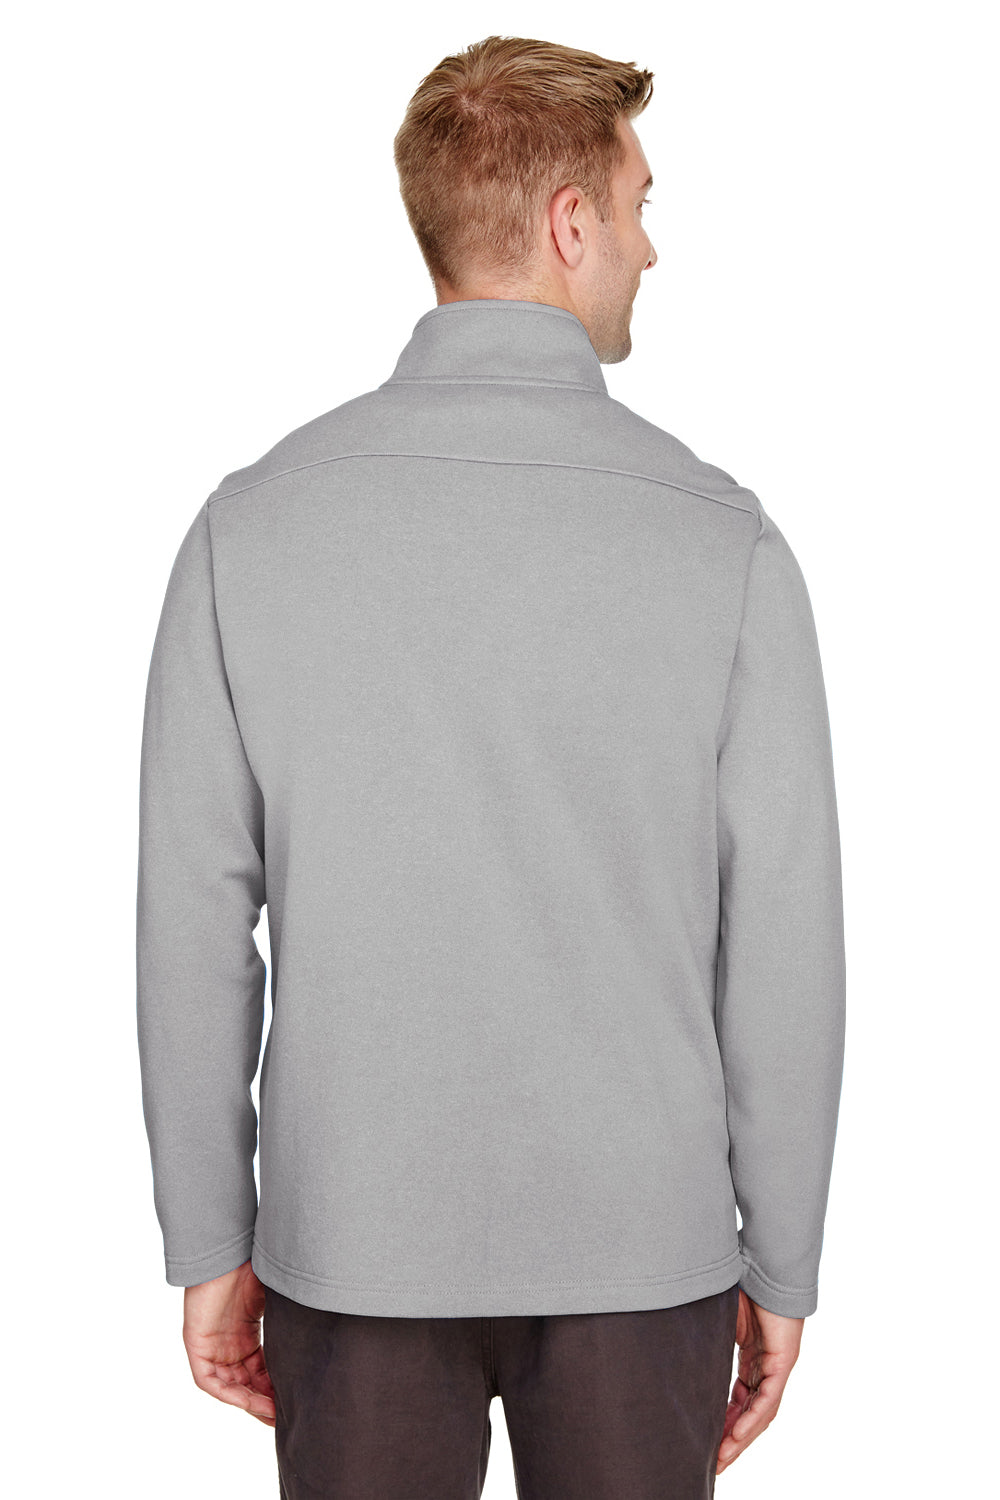 UltraClub UC792 Mens Coastal Performance Moisture Wicking Fleece 1/4 Zip Sweatshirt Silver Grey Back